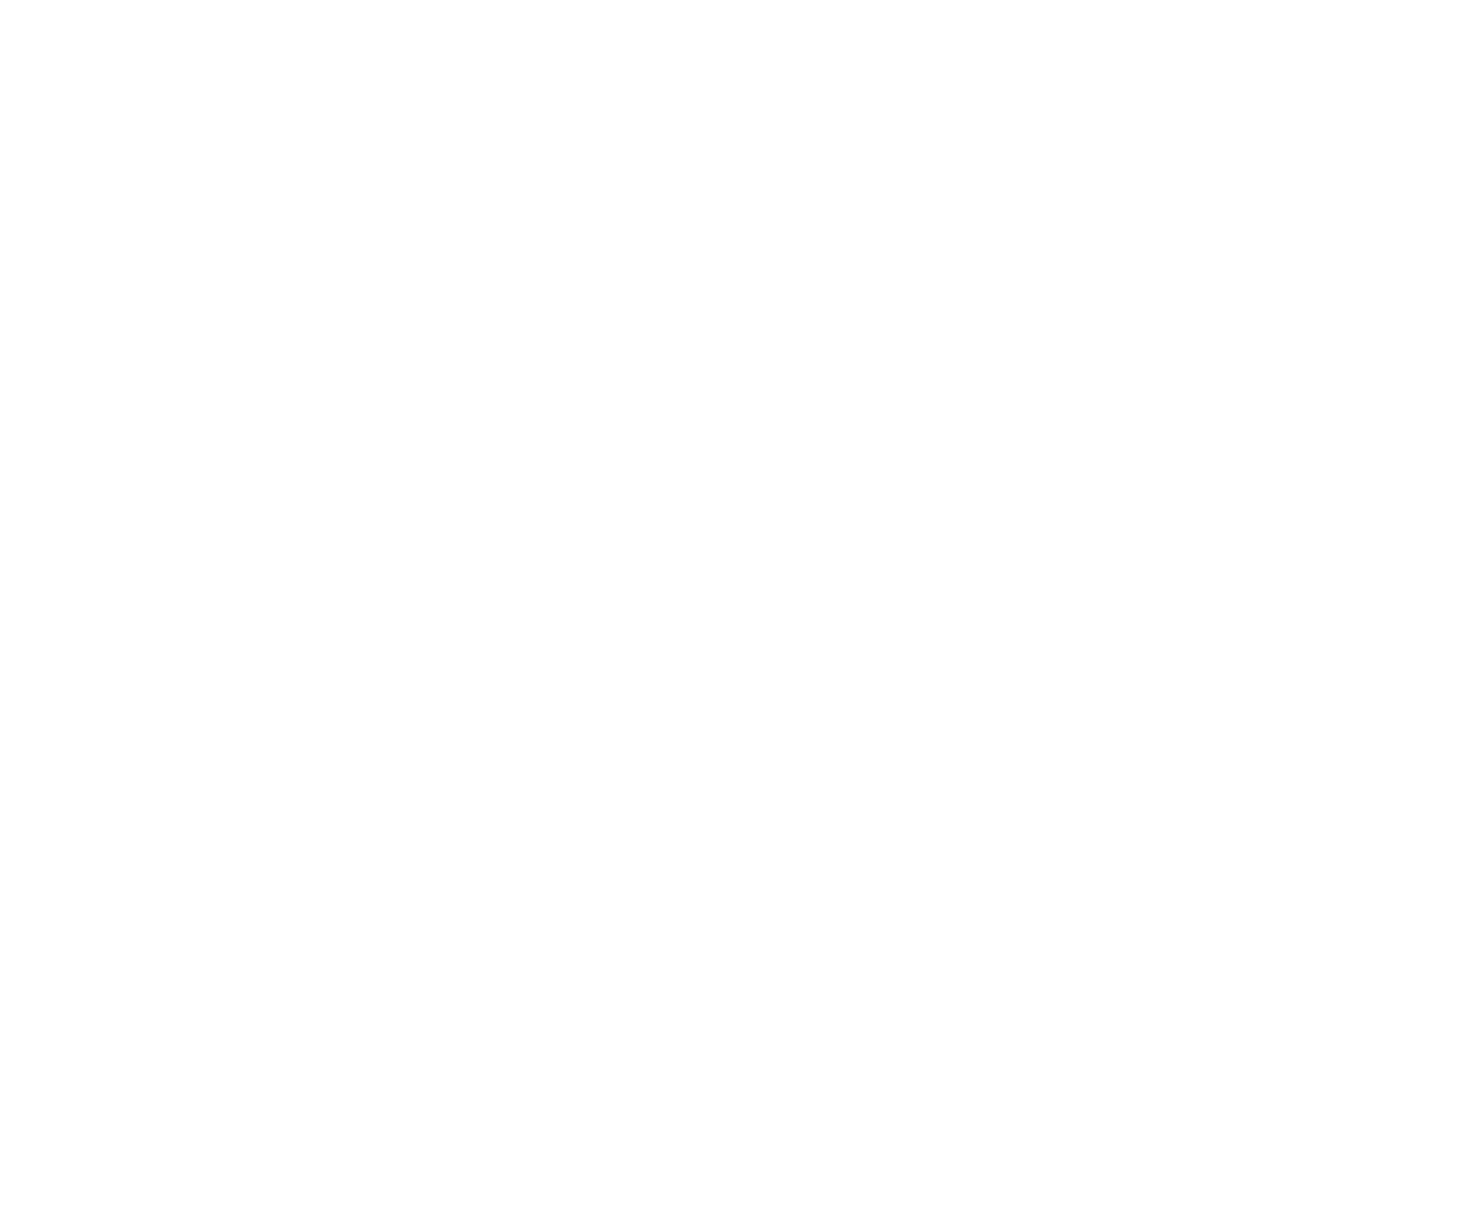 Americorps Seniors Stackedlogo White